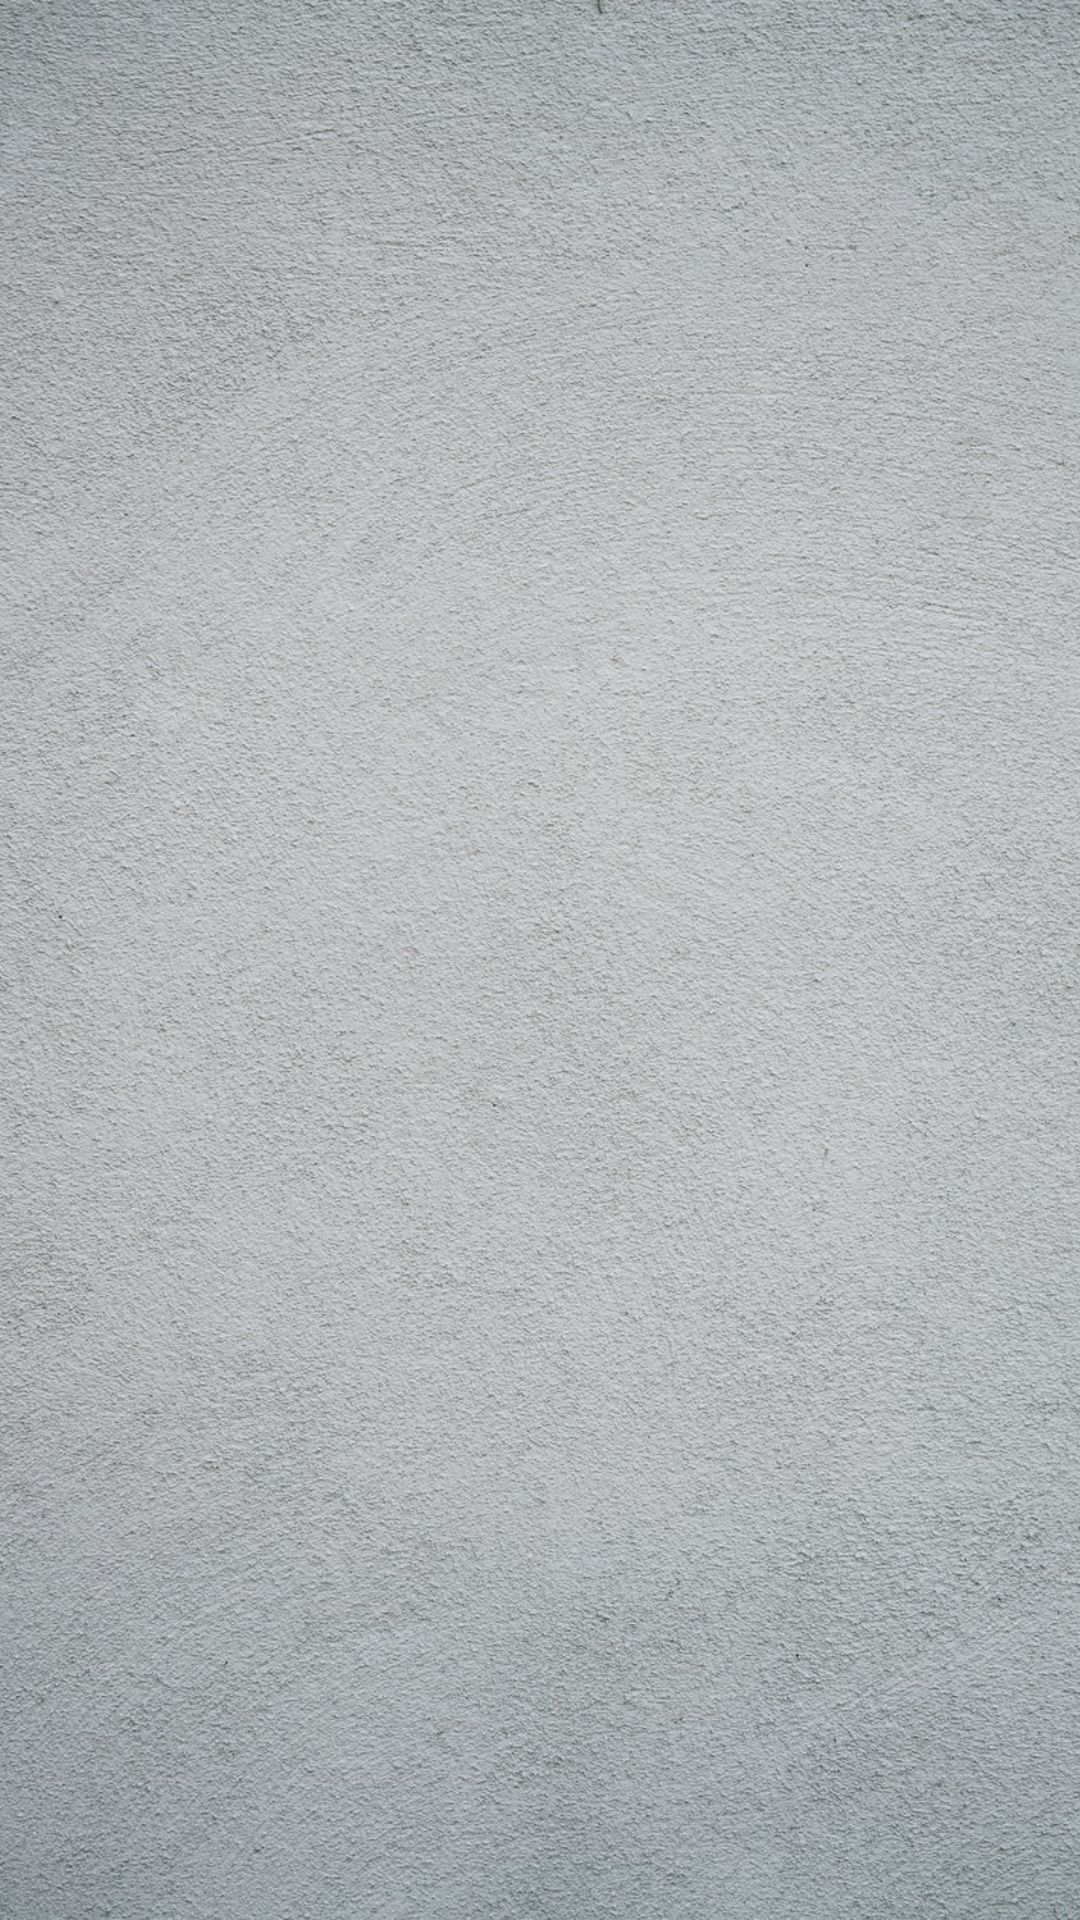 Solid Grey Full HD Wallpaper